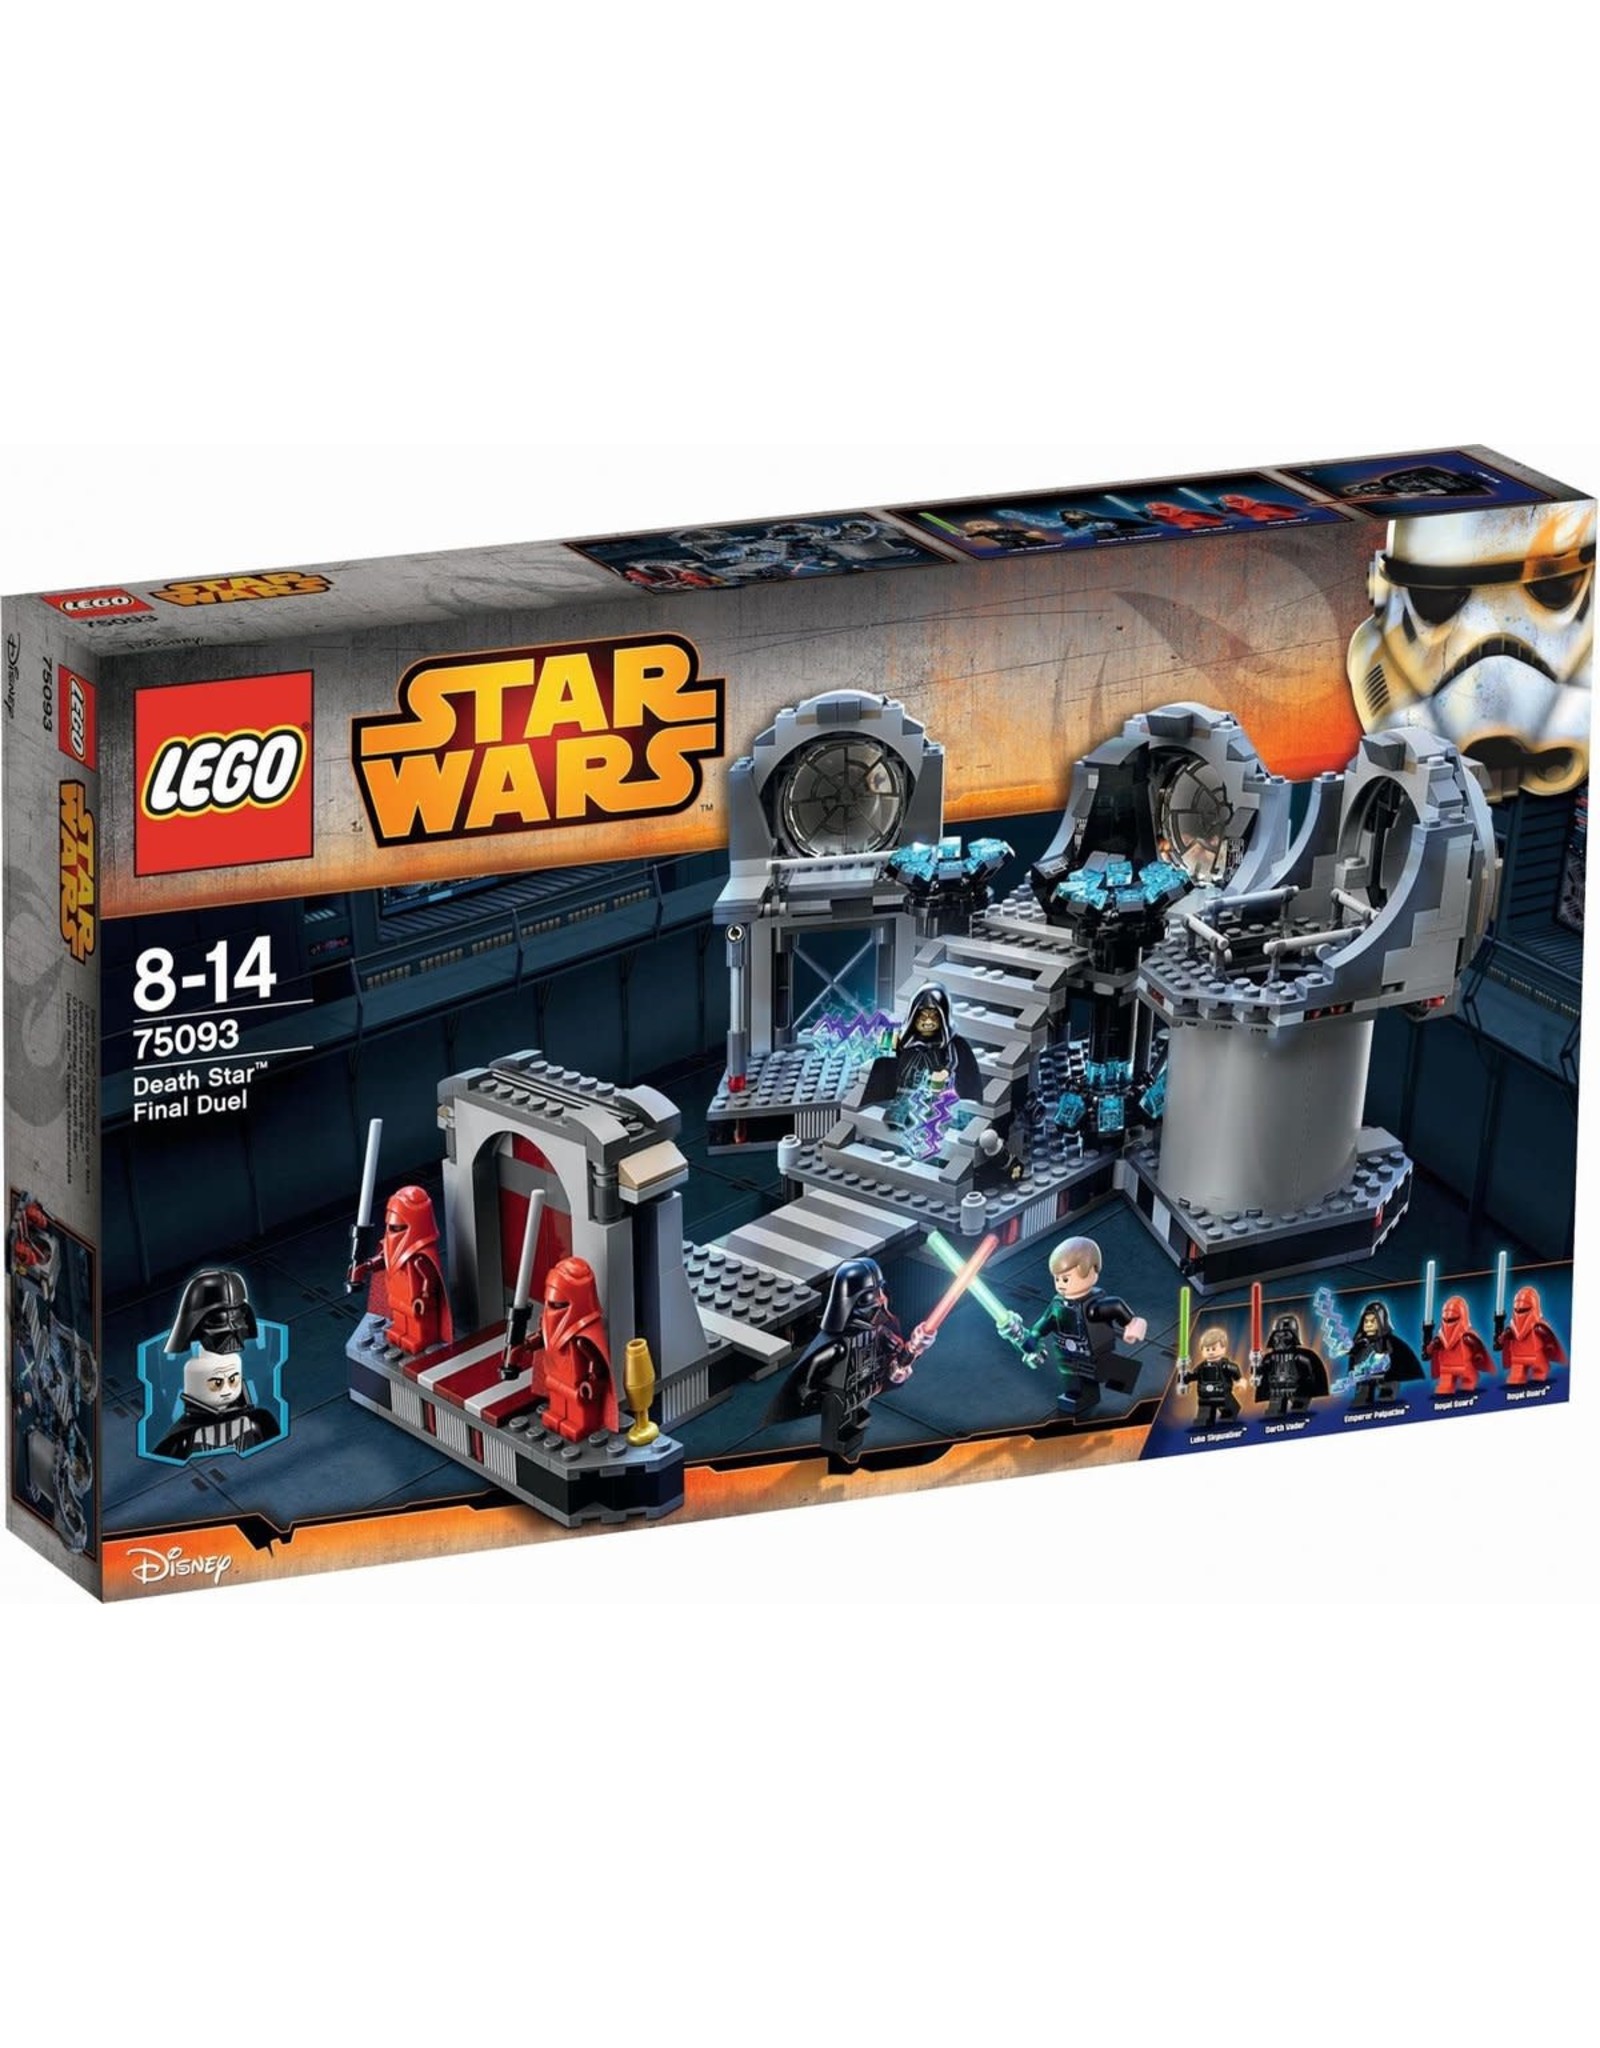 LEGO Lego Star Wars 75093 Death Star™ Beslissend Duel  - Death Star Final Duel